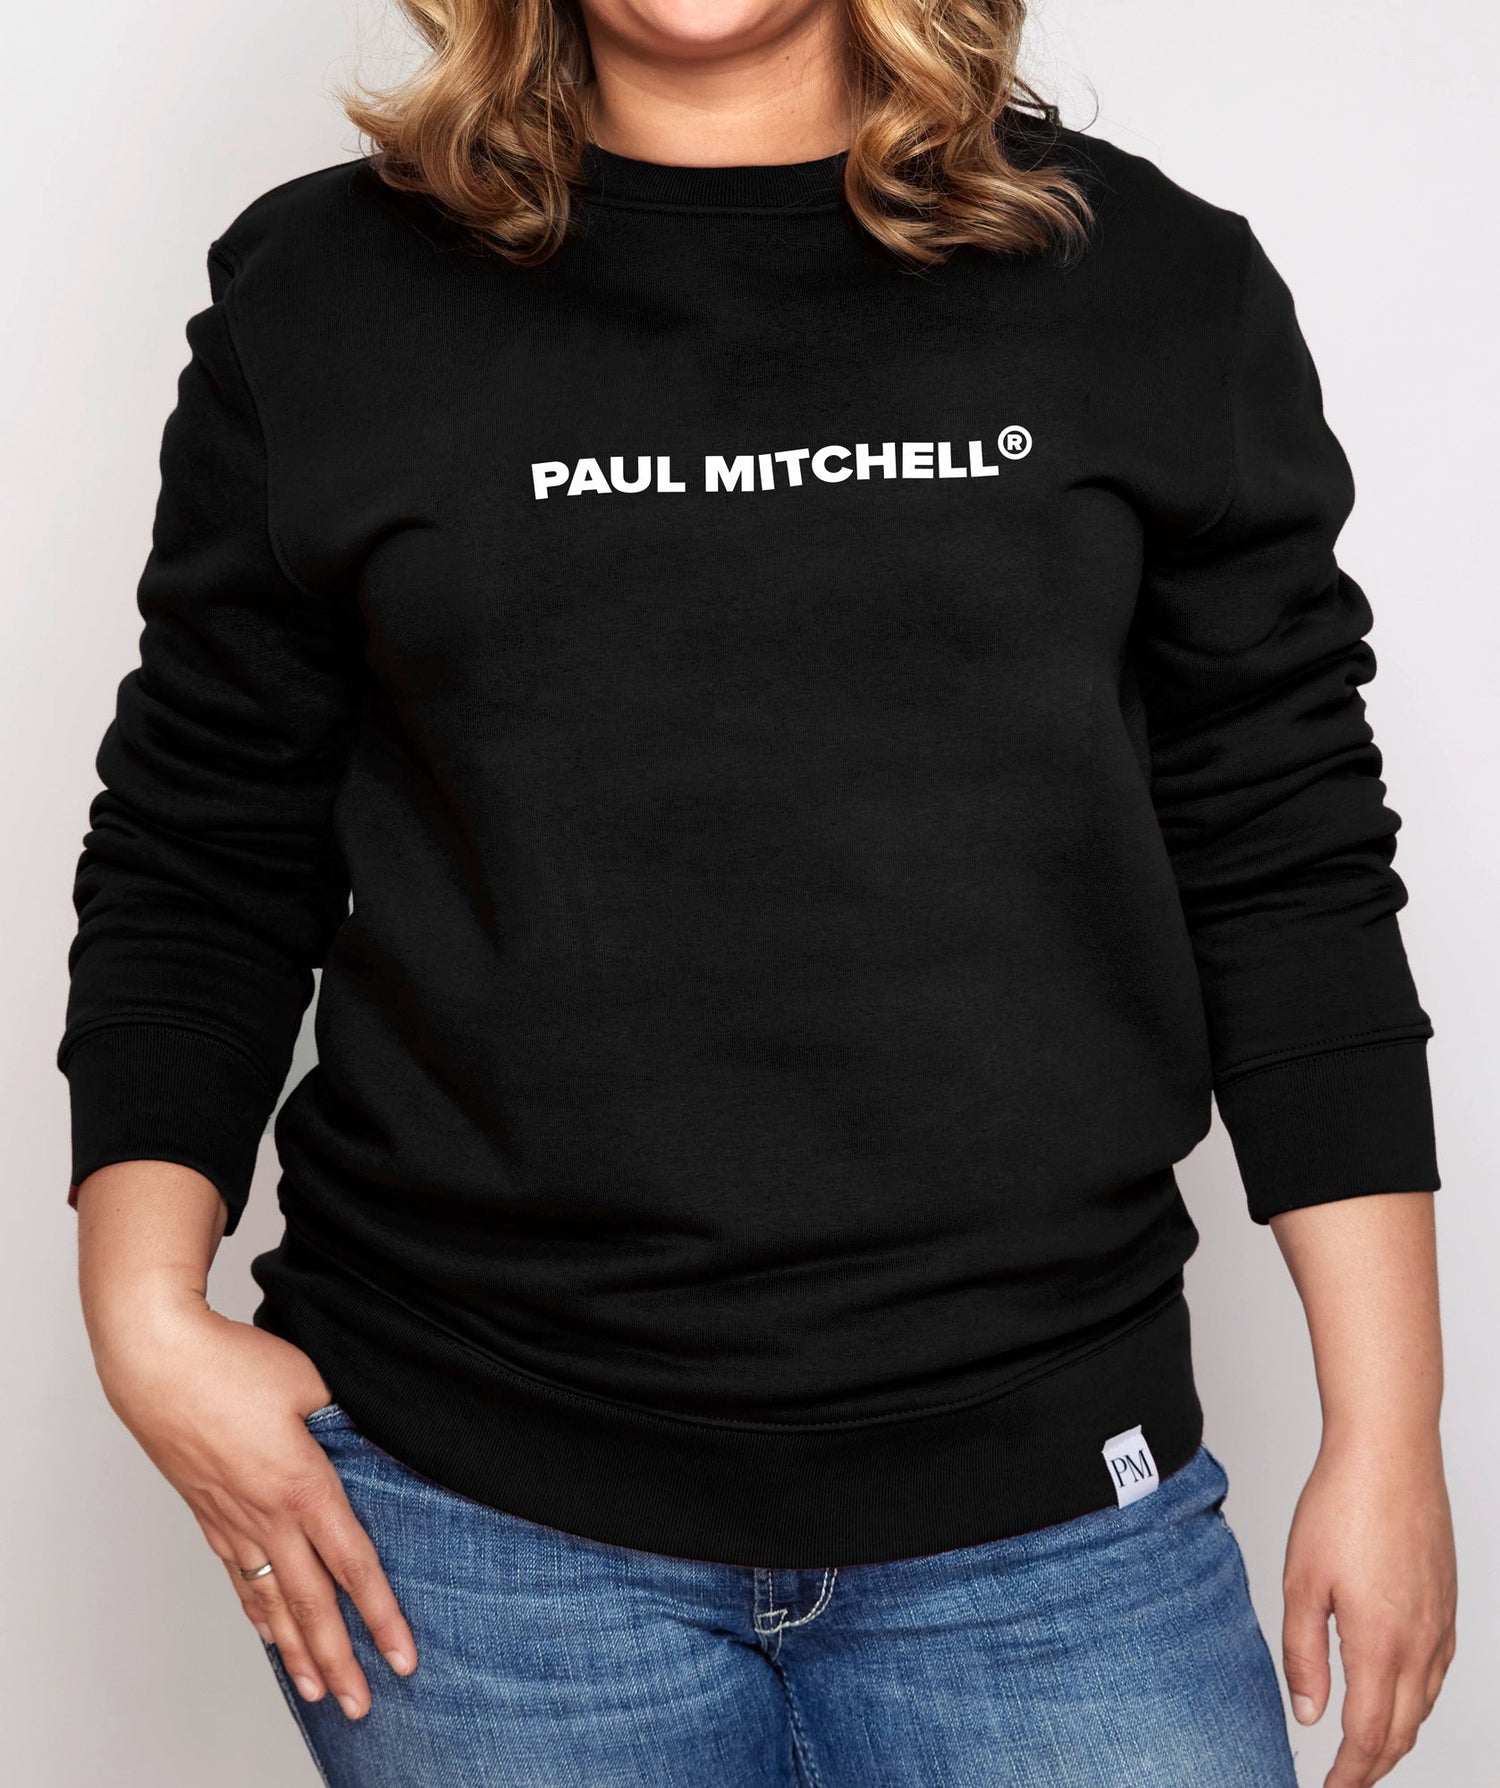 PAUL MITCHELL® SWEATSHIRT &quot;LOGO“ – UNISEX - Paul Mitchell